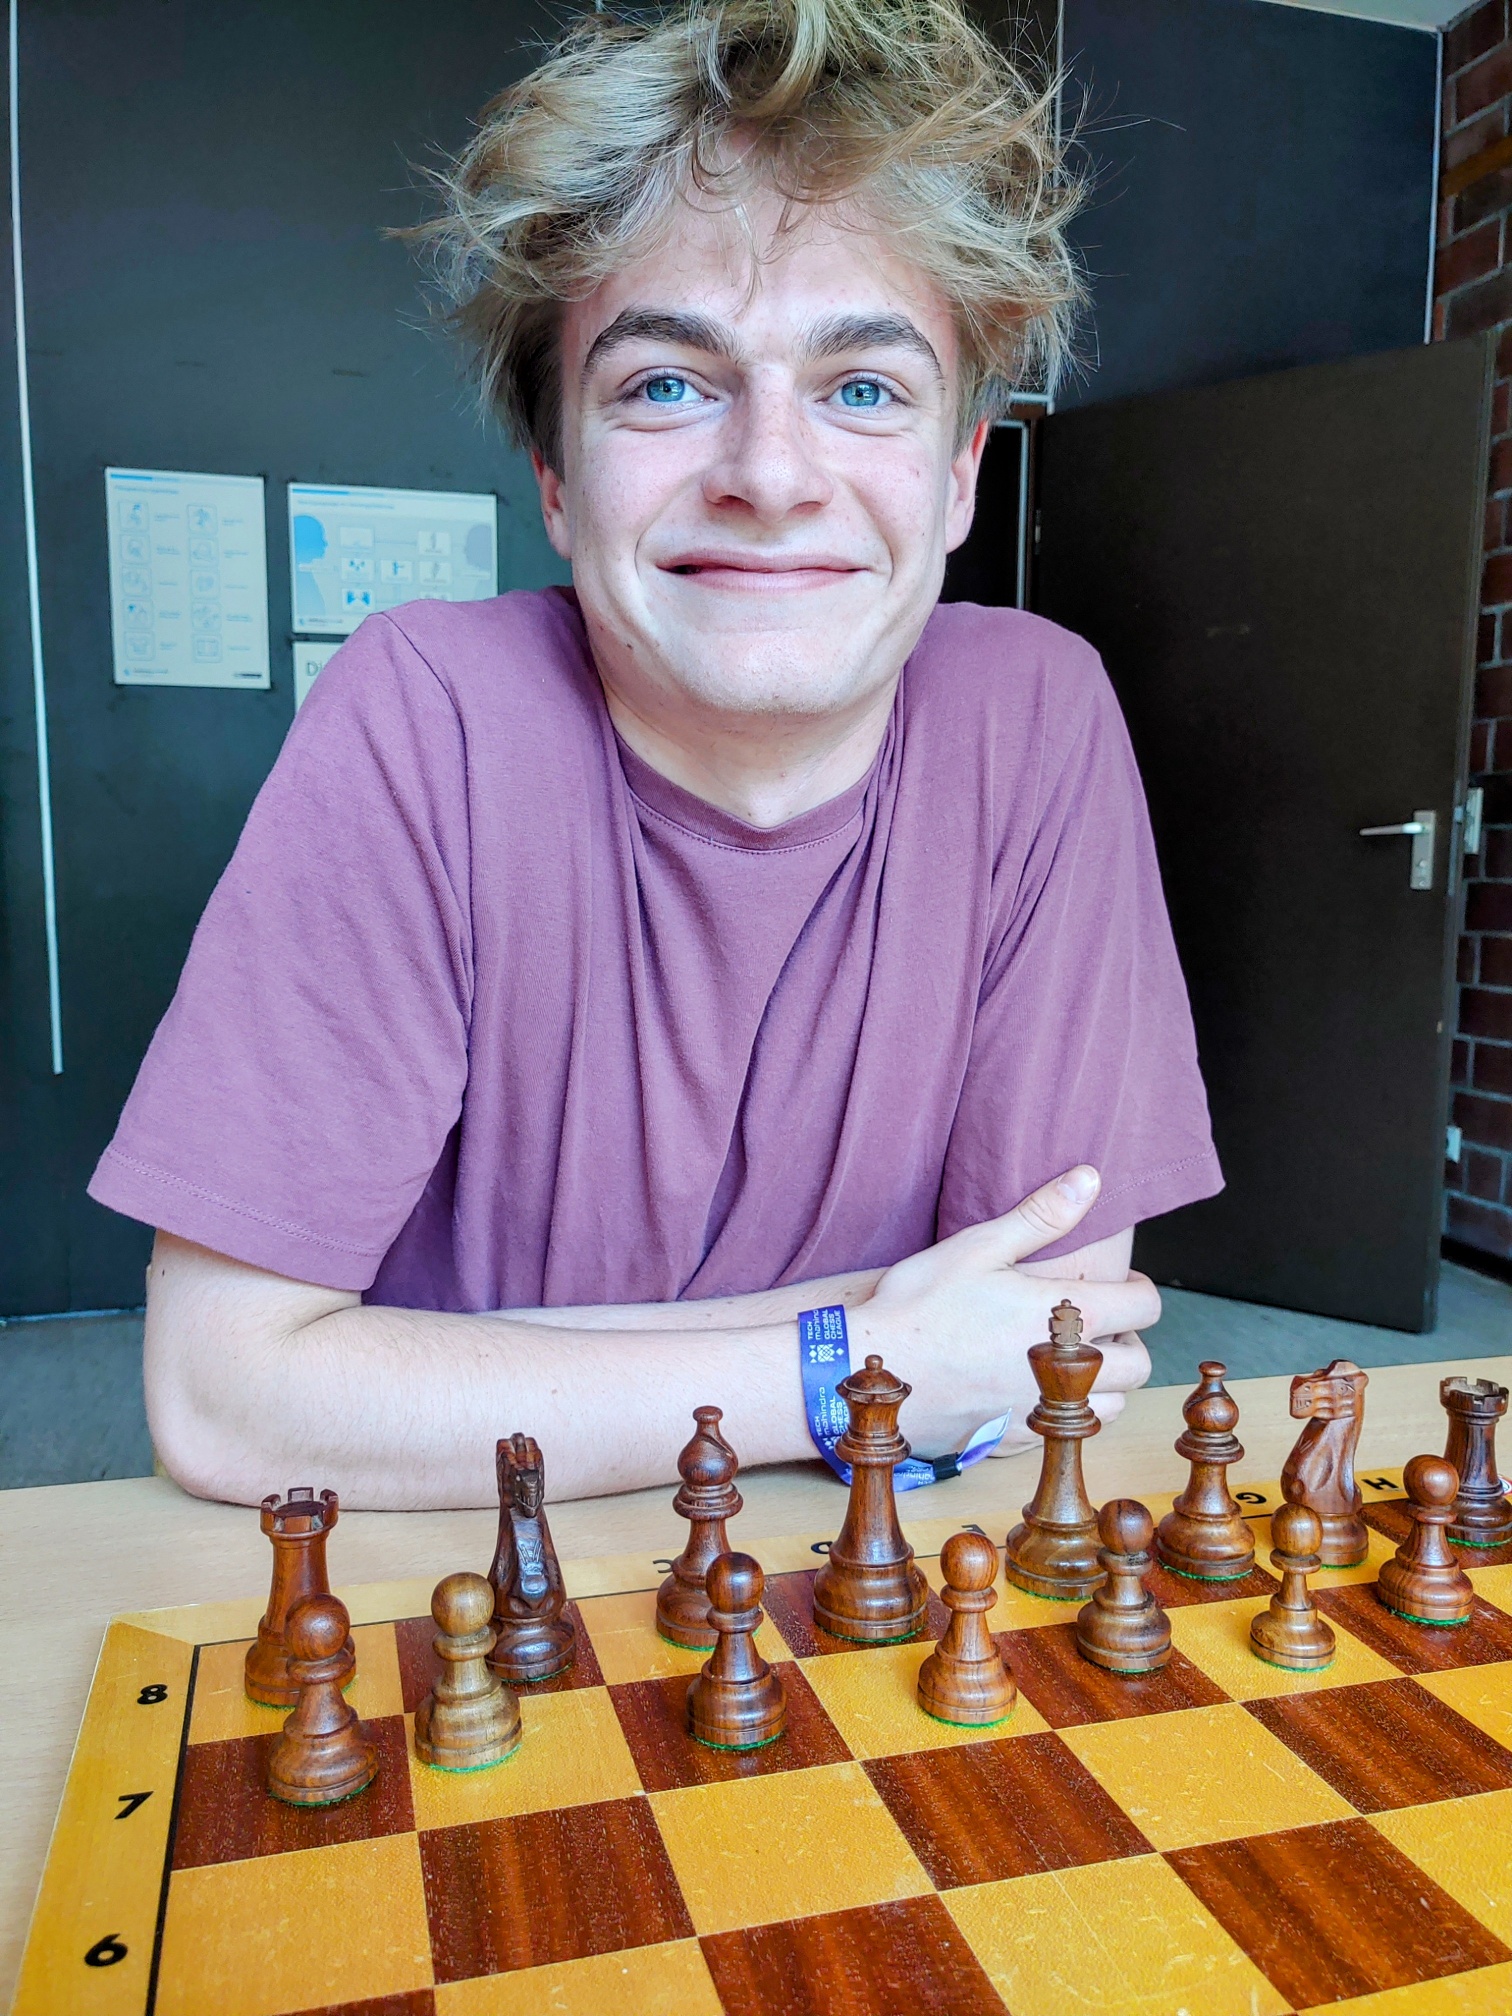 Global Chess League mit Elisabeth Pähtz startet am 21